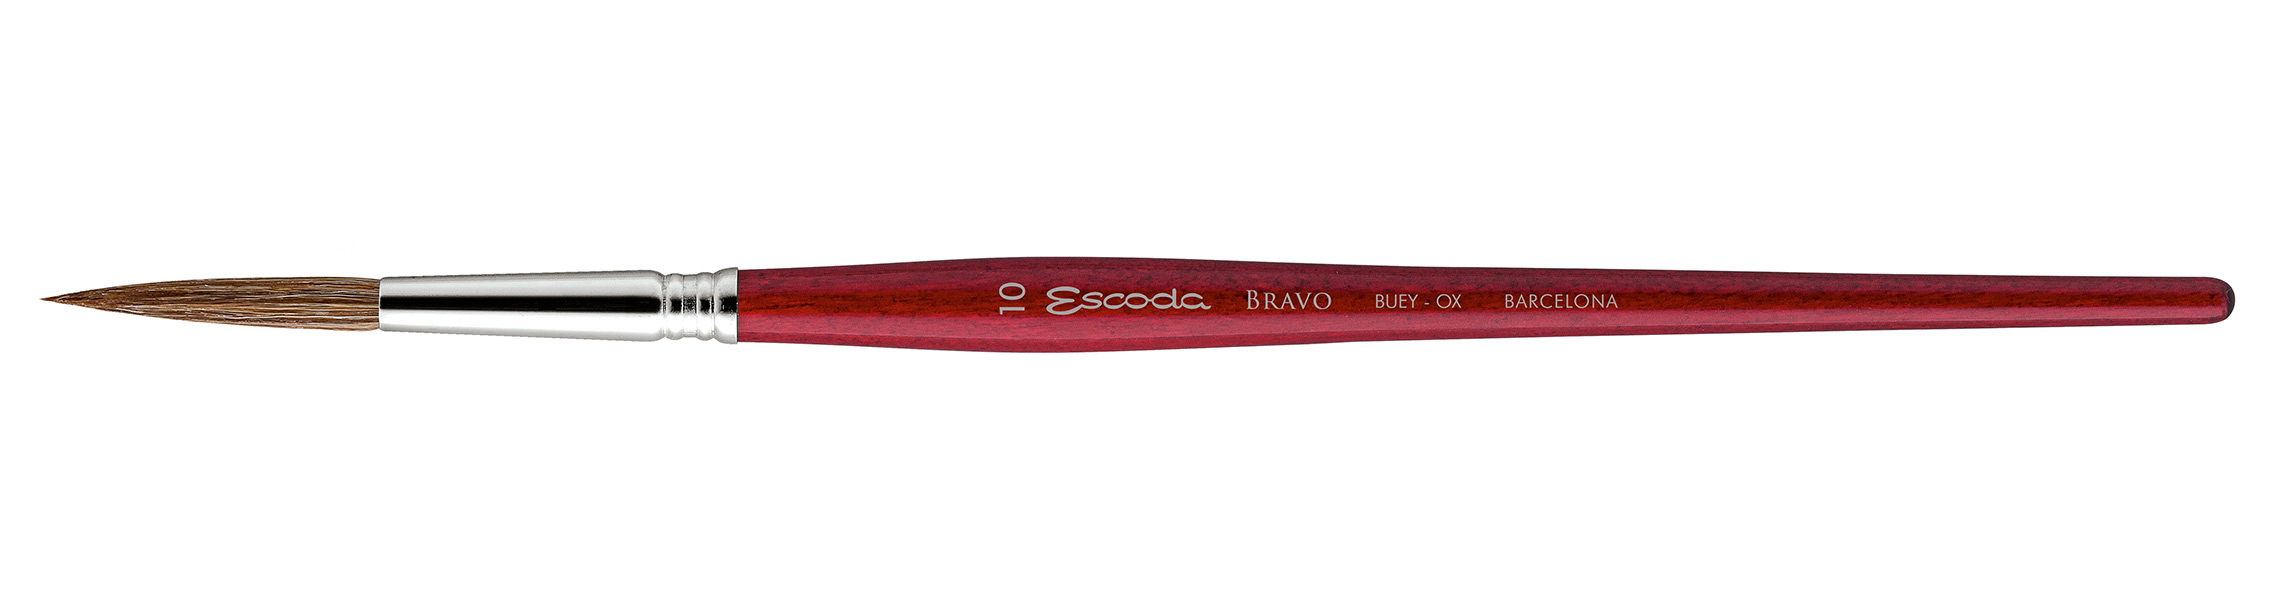 Escoda brushes serie 6421